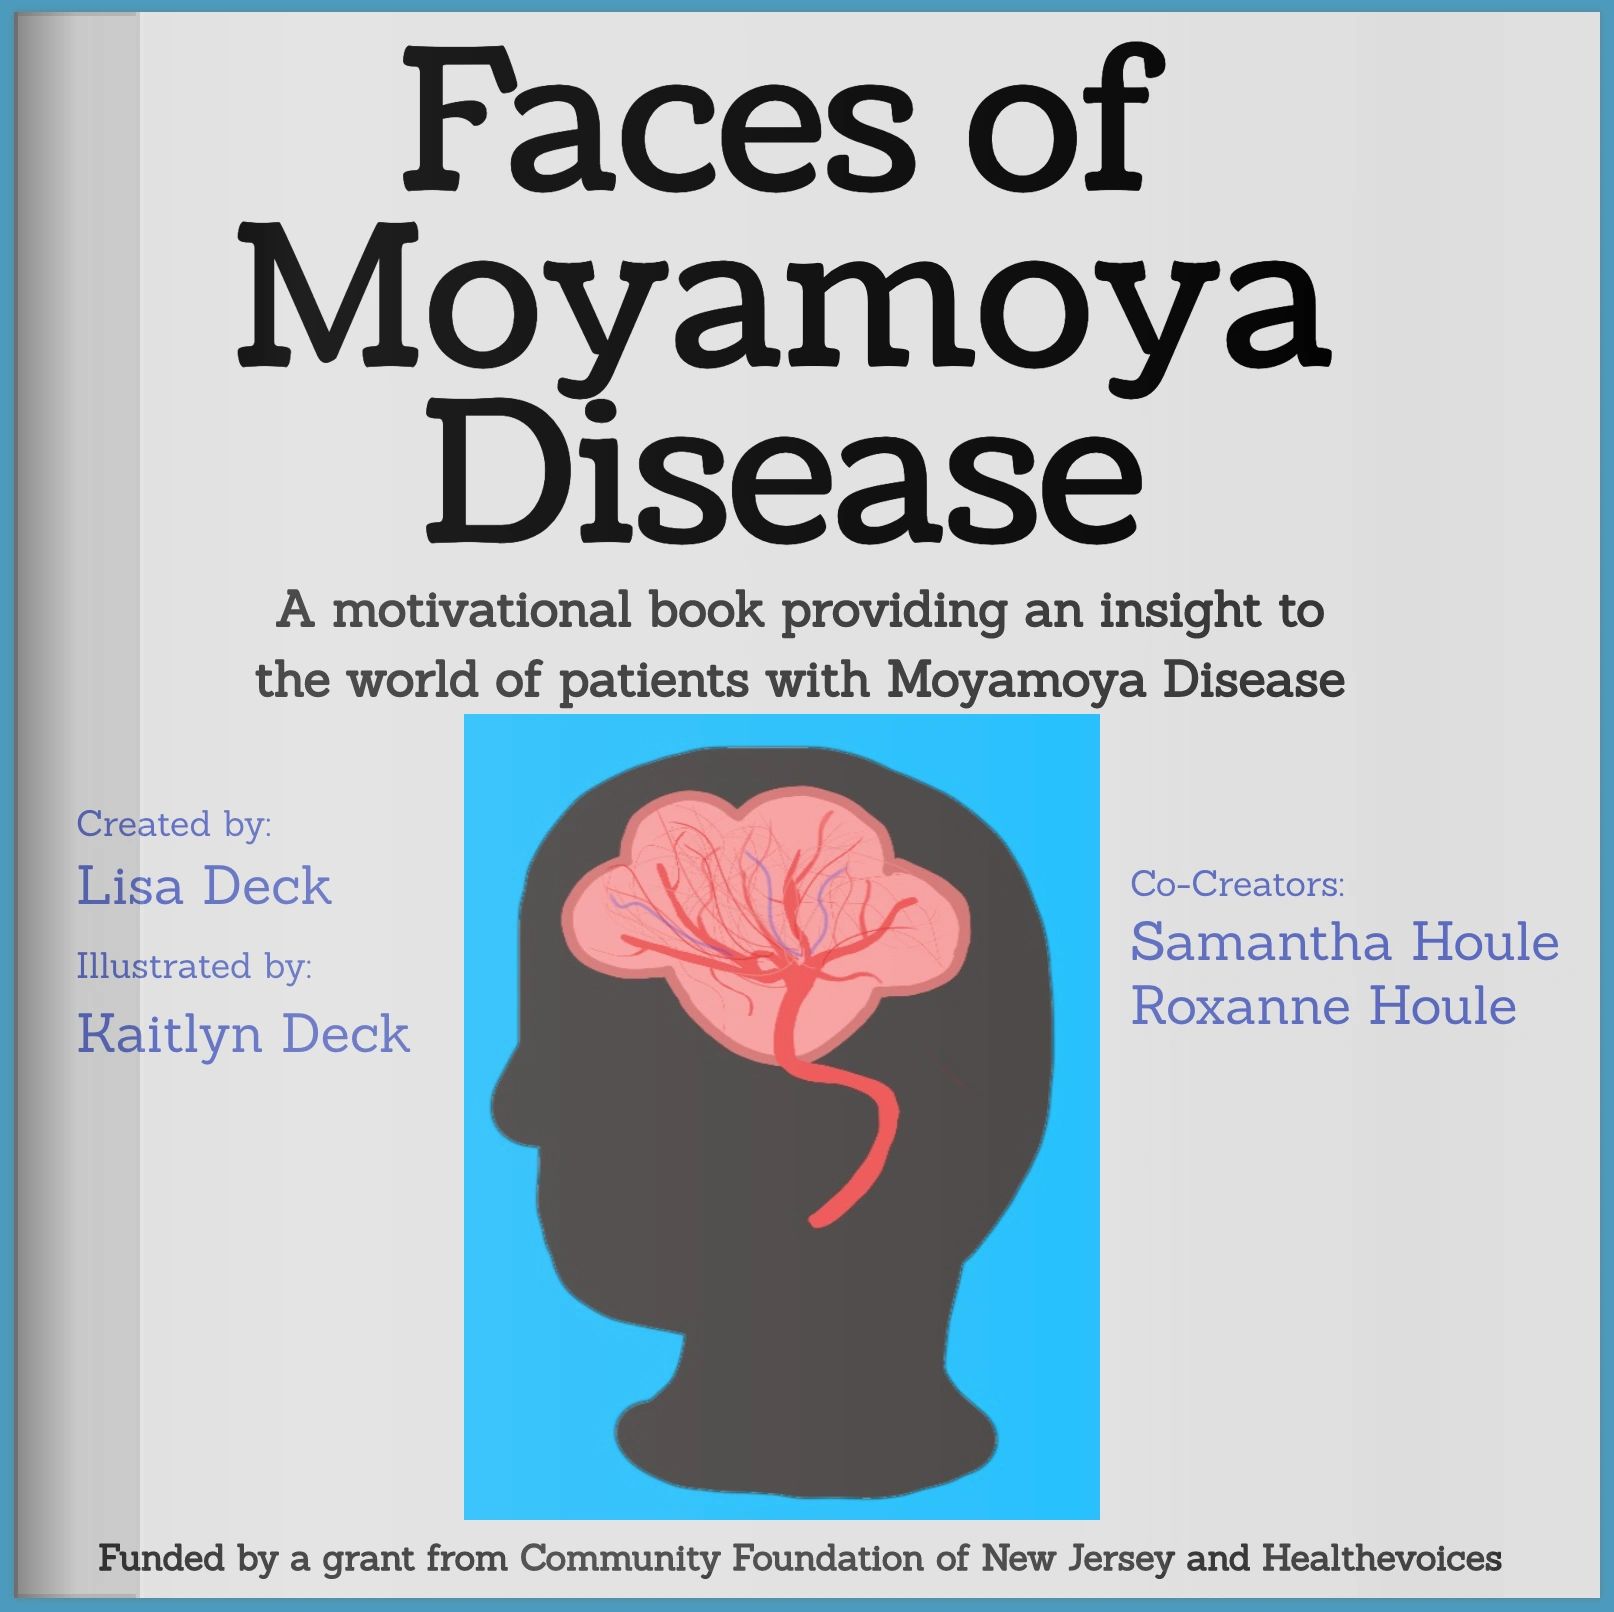 Faces of Moyamoya Disease motivational book